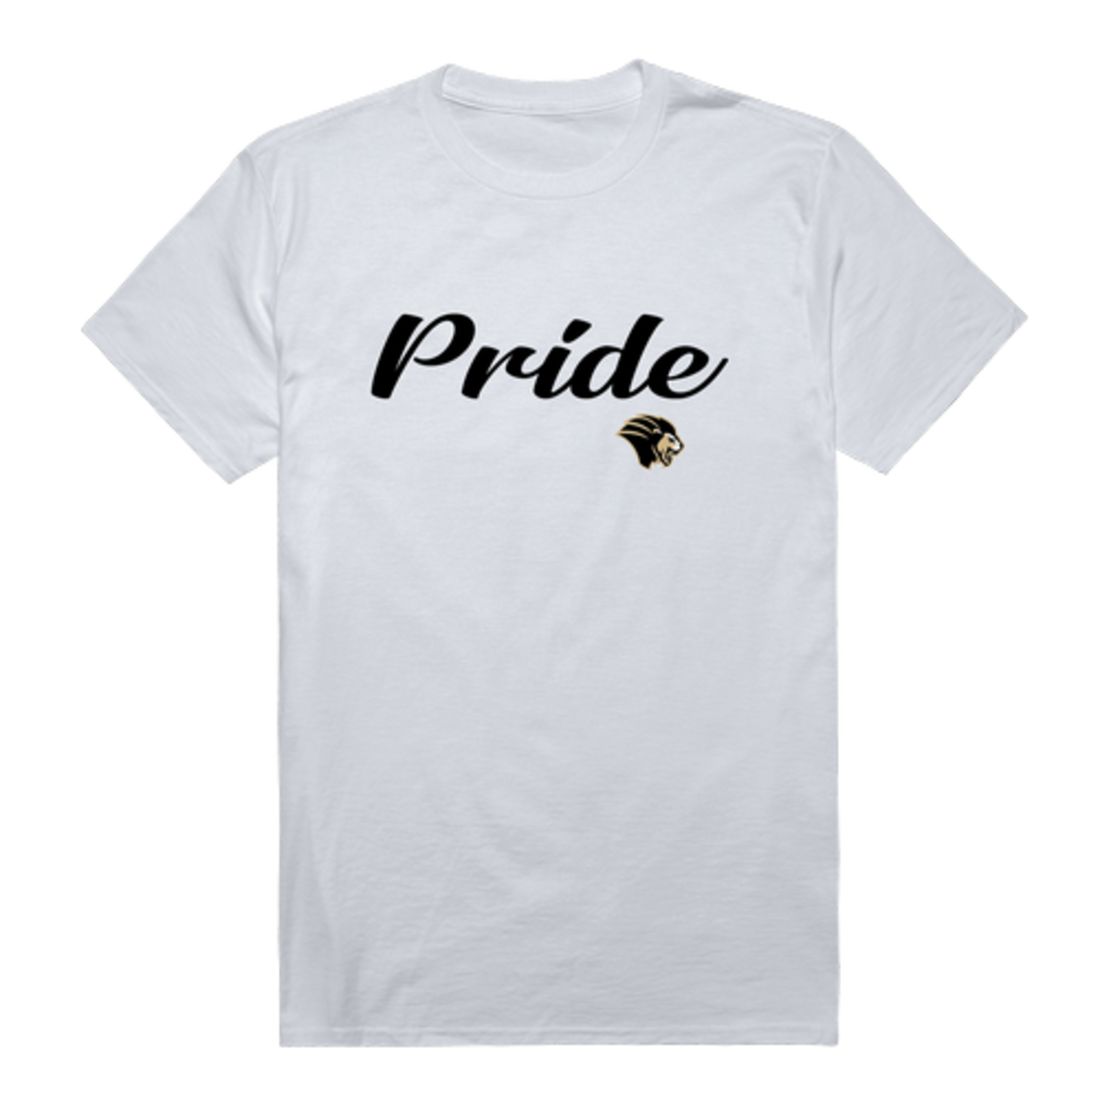 Purdue University Northwest Lion Script T-Shirt Tee